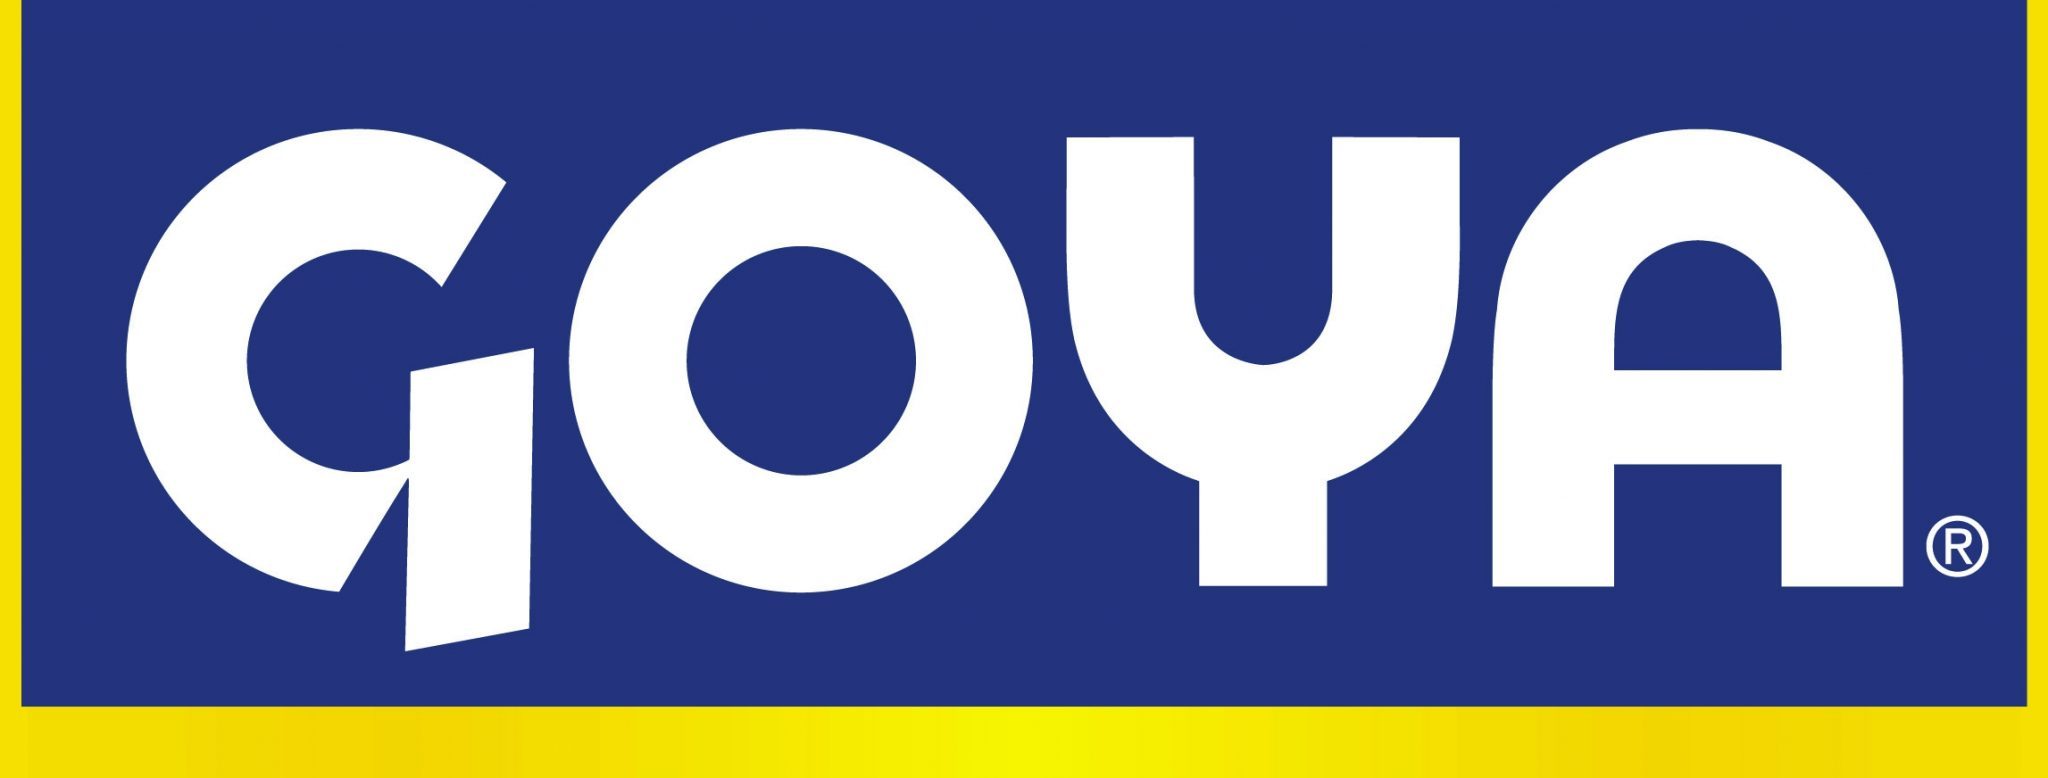 goya-logo1.jpg